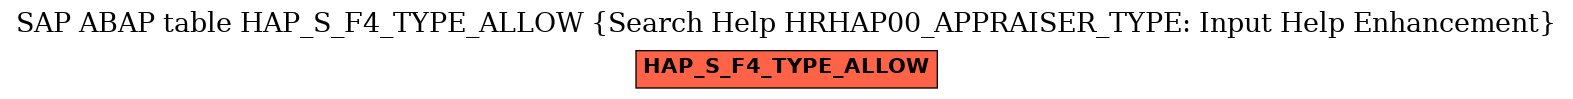 E-R Diagram for table HAP_S_F4_TYPE_ALLOW (Search Help HRHAP00_APPRAISER_TYPE: Input Help Enhancement)